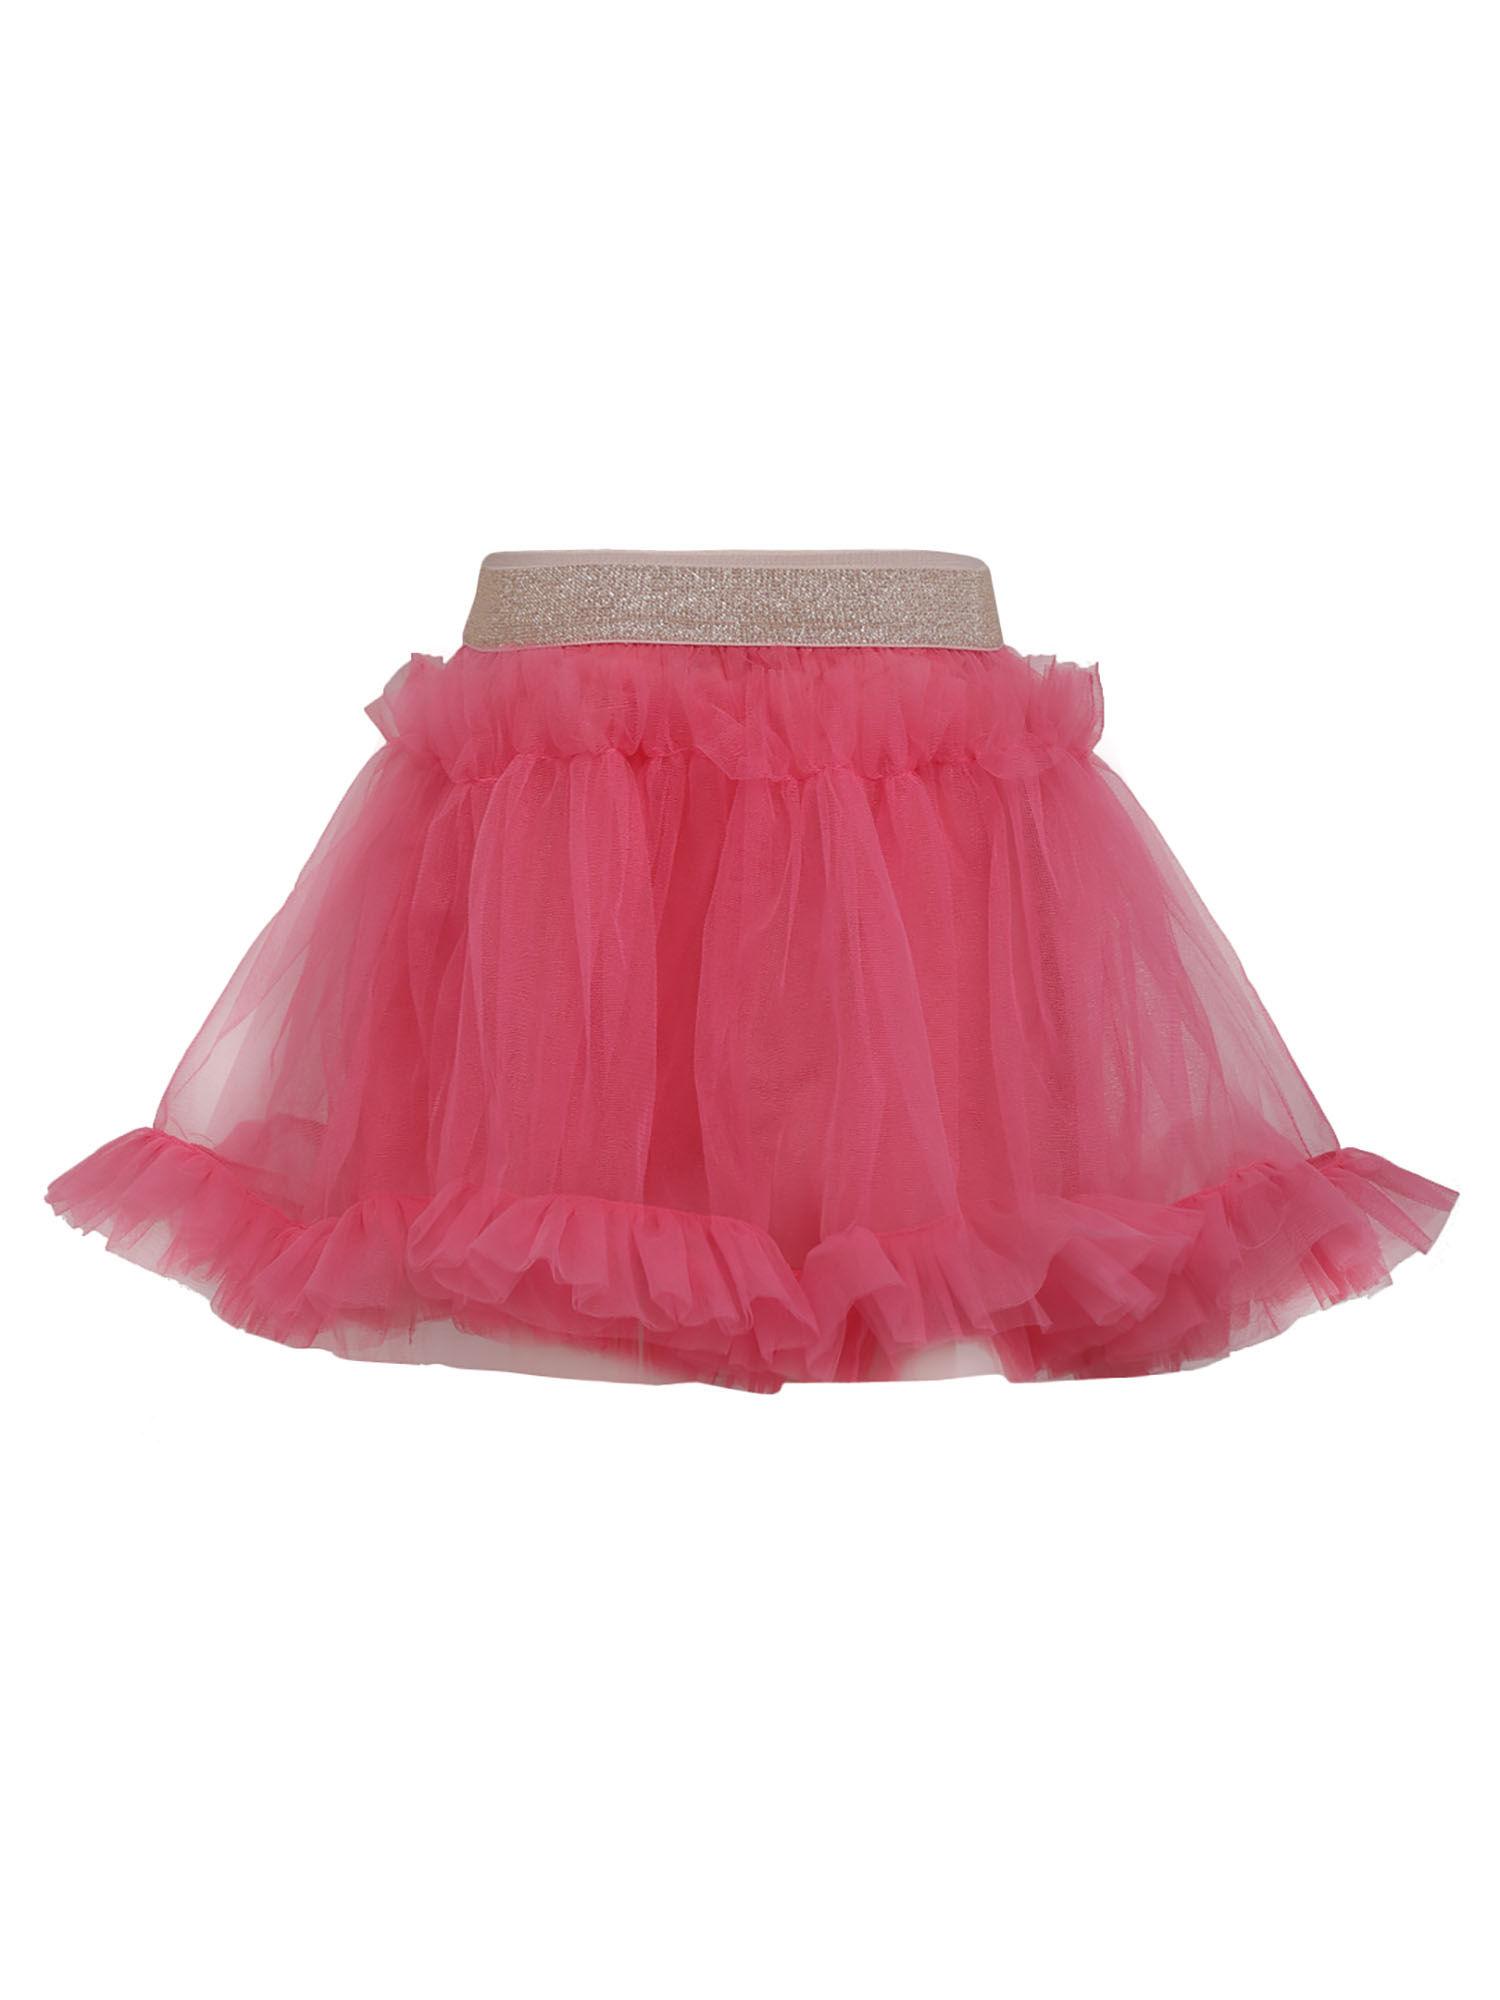 pink-tutu-skirt